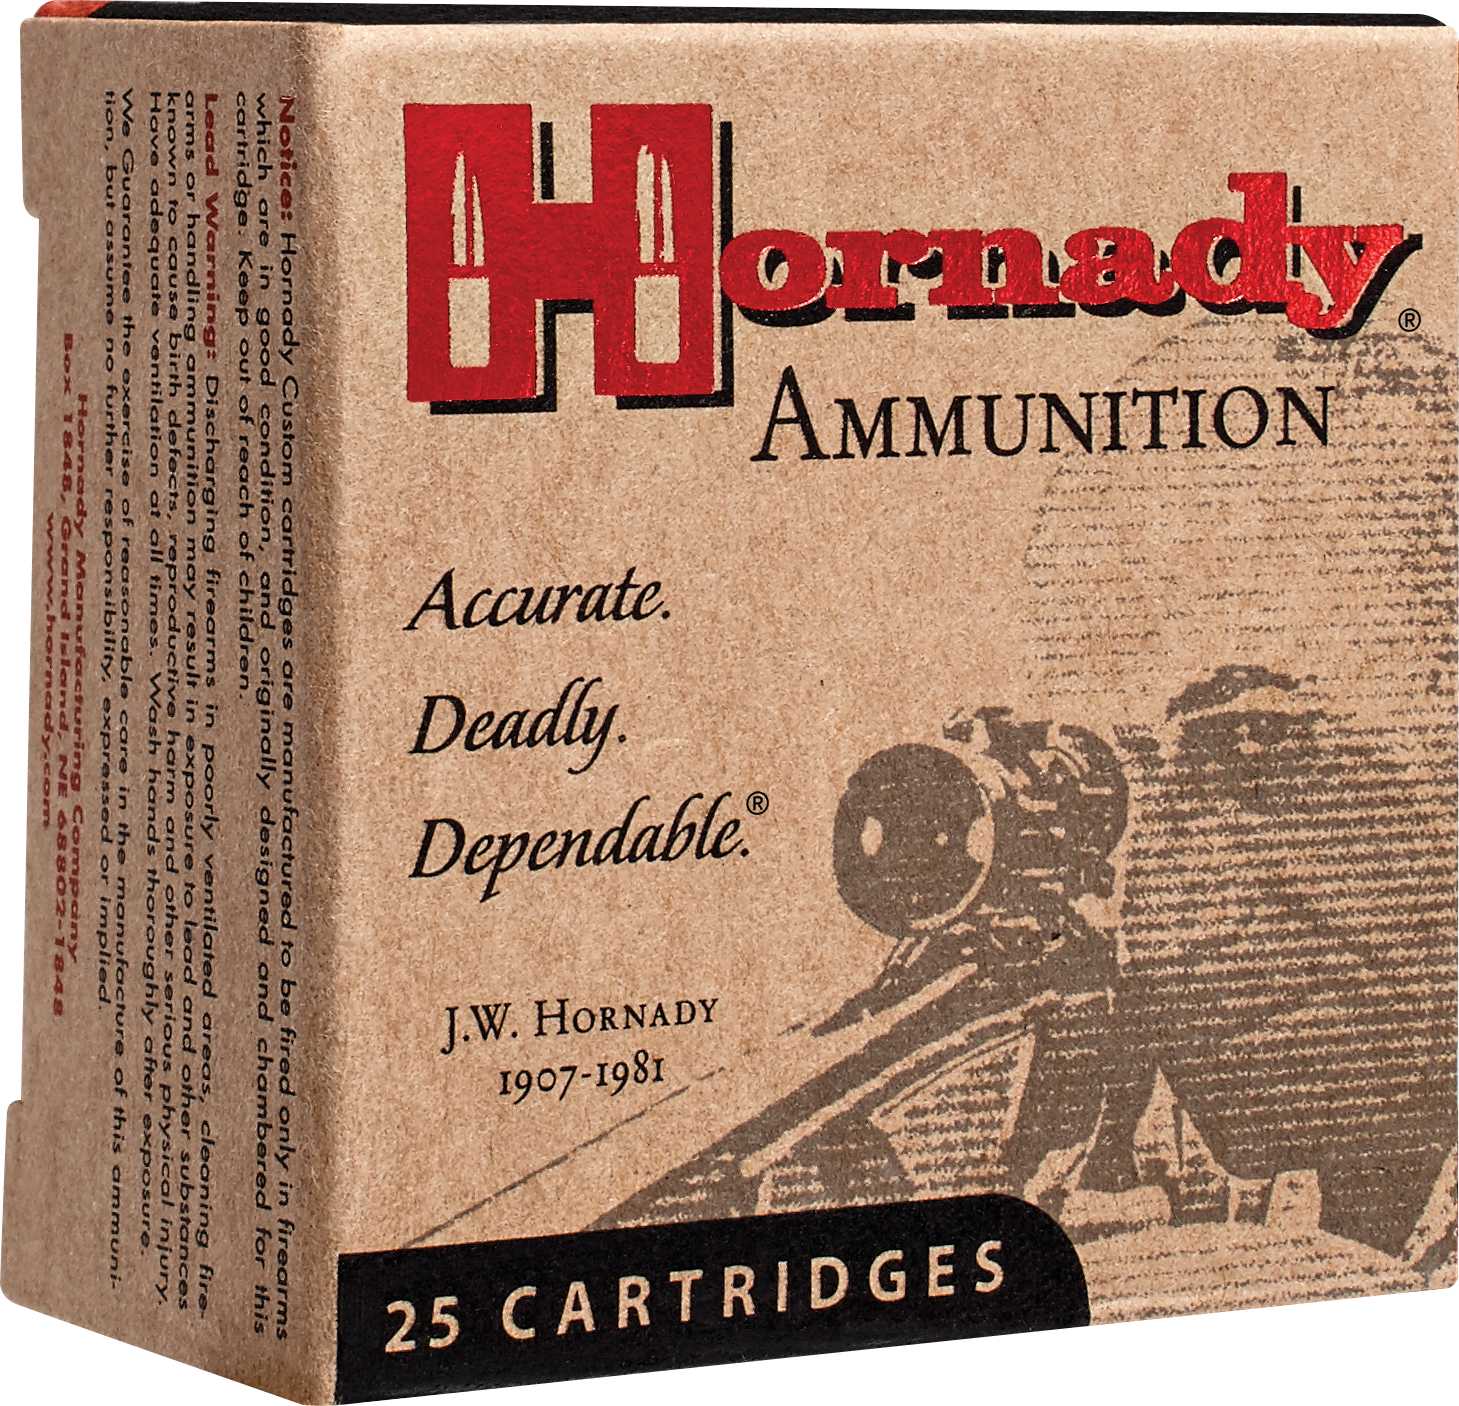 44-40 Winchester 20 Rounds Ammunition Hornady 205 Grain Lead